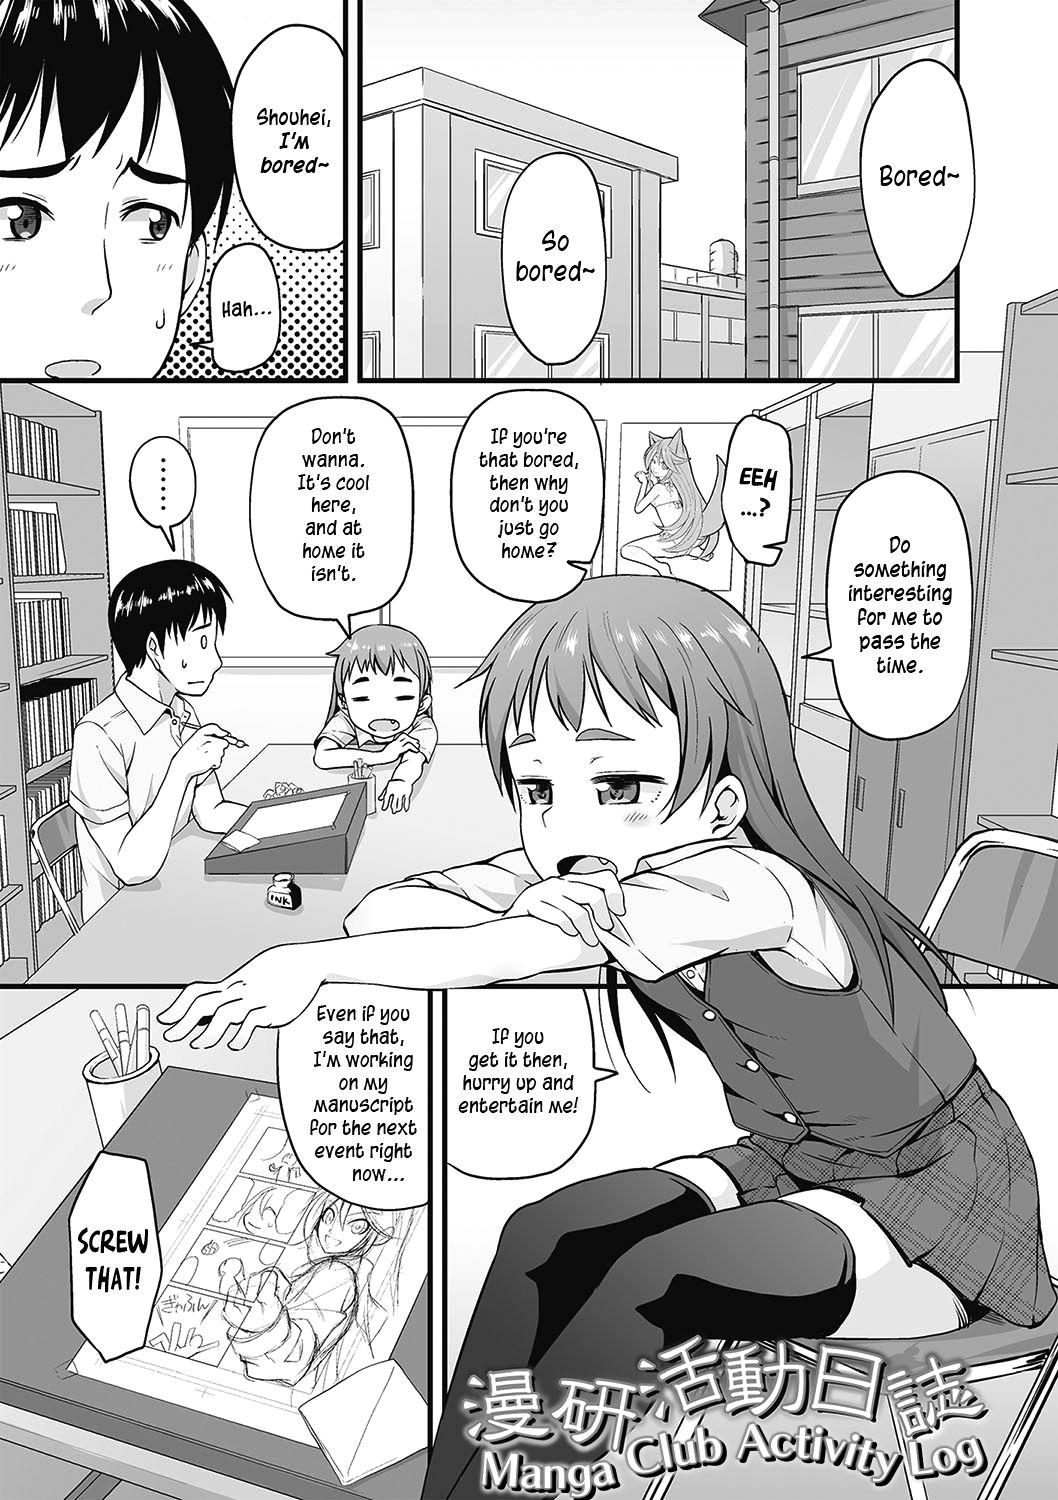 Manga Club Activity Log 0